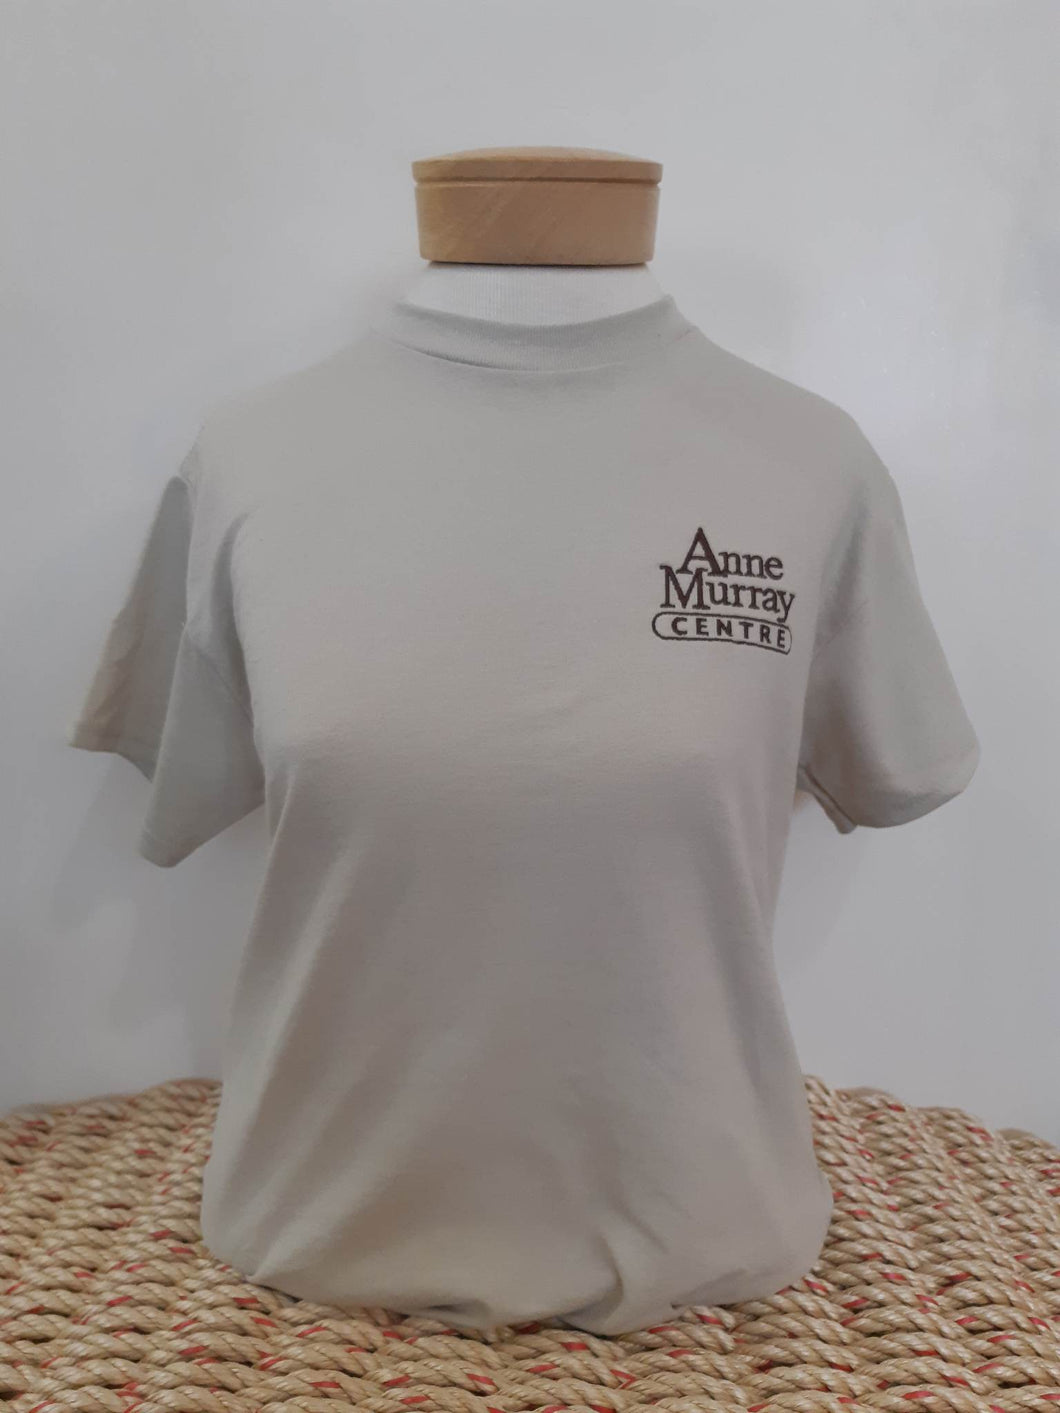 Anne Murray Centre T-shirt